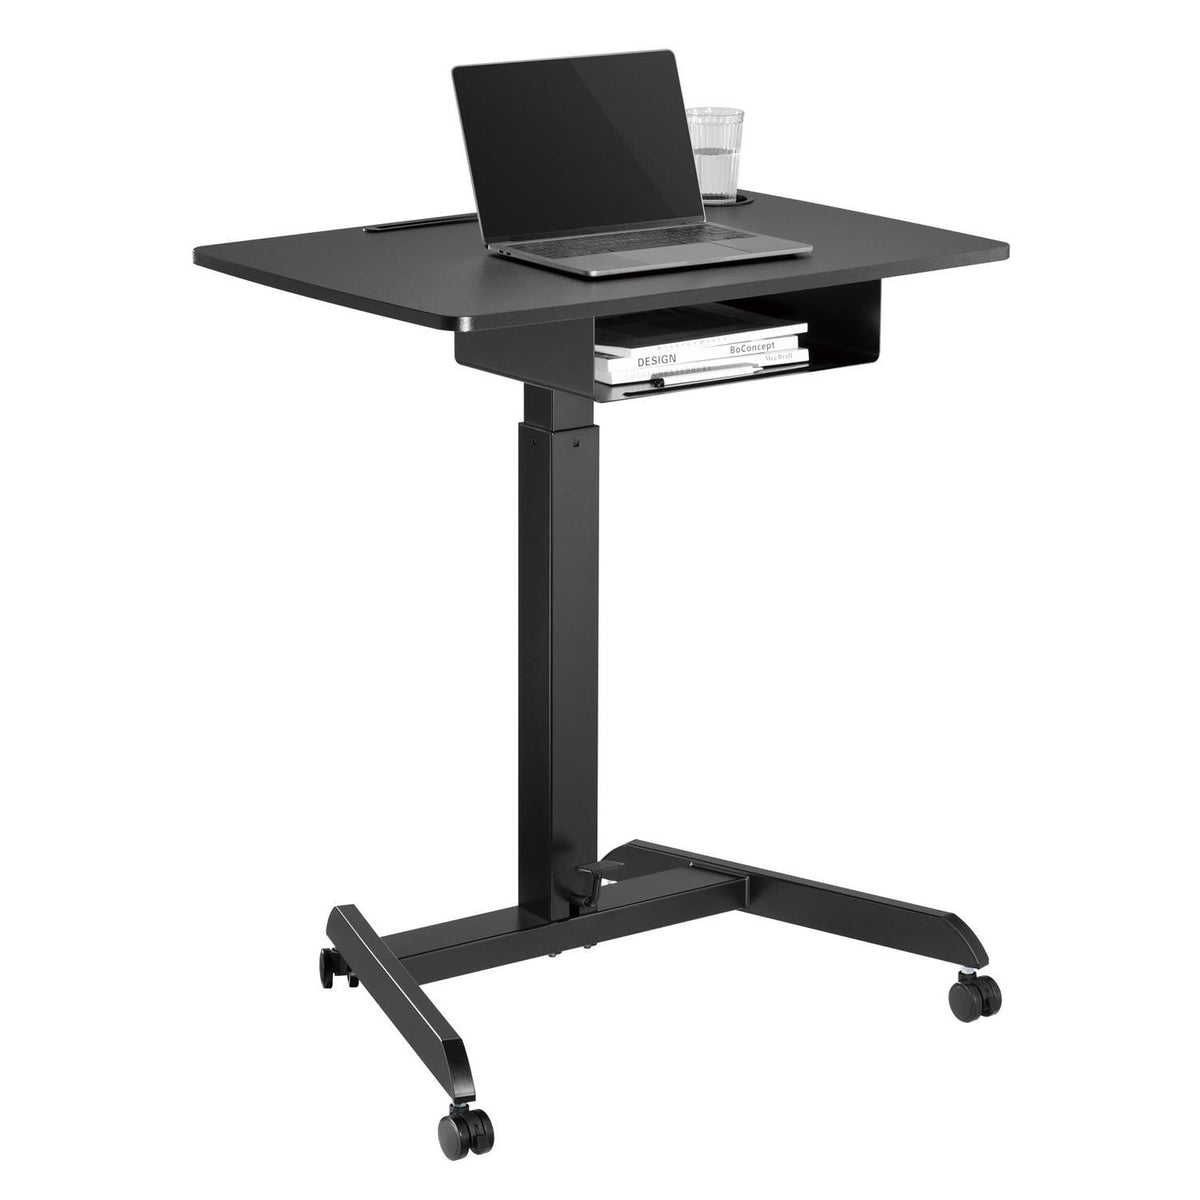 Iper pratico, la scrivania seduta in posizione verticale è di ottima  qualità.